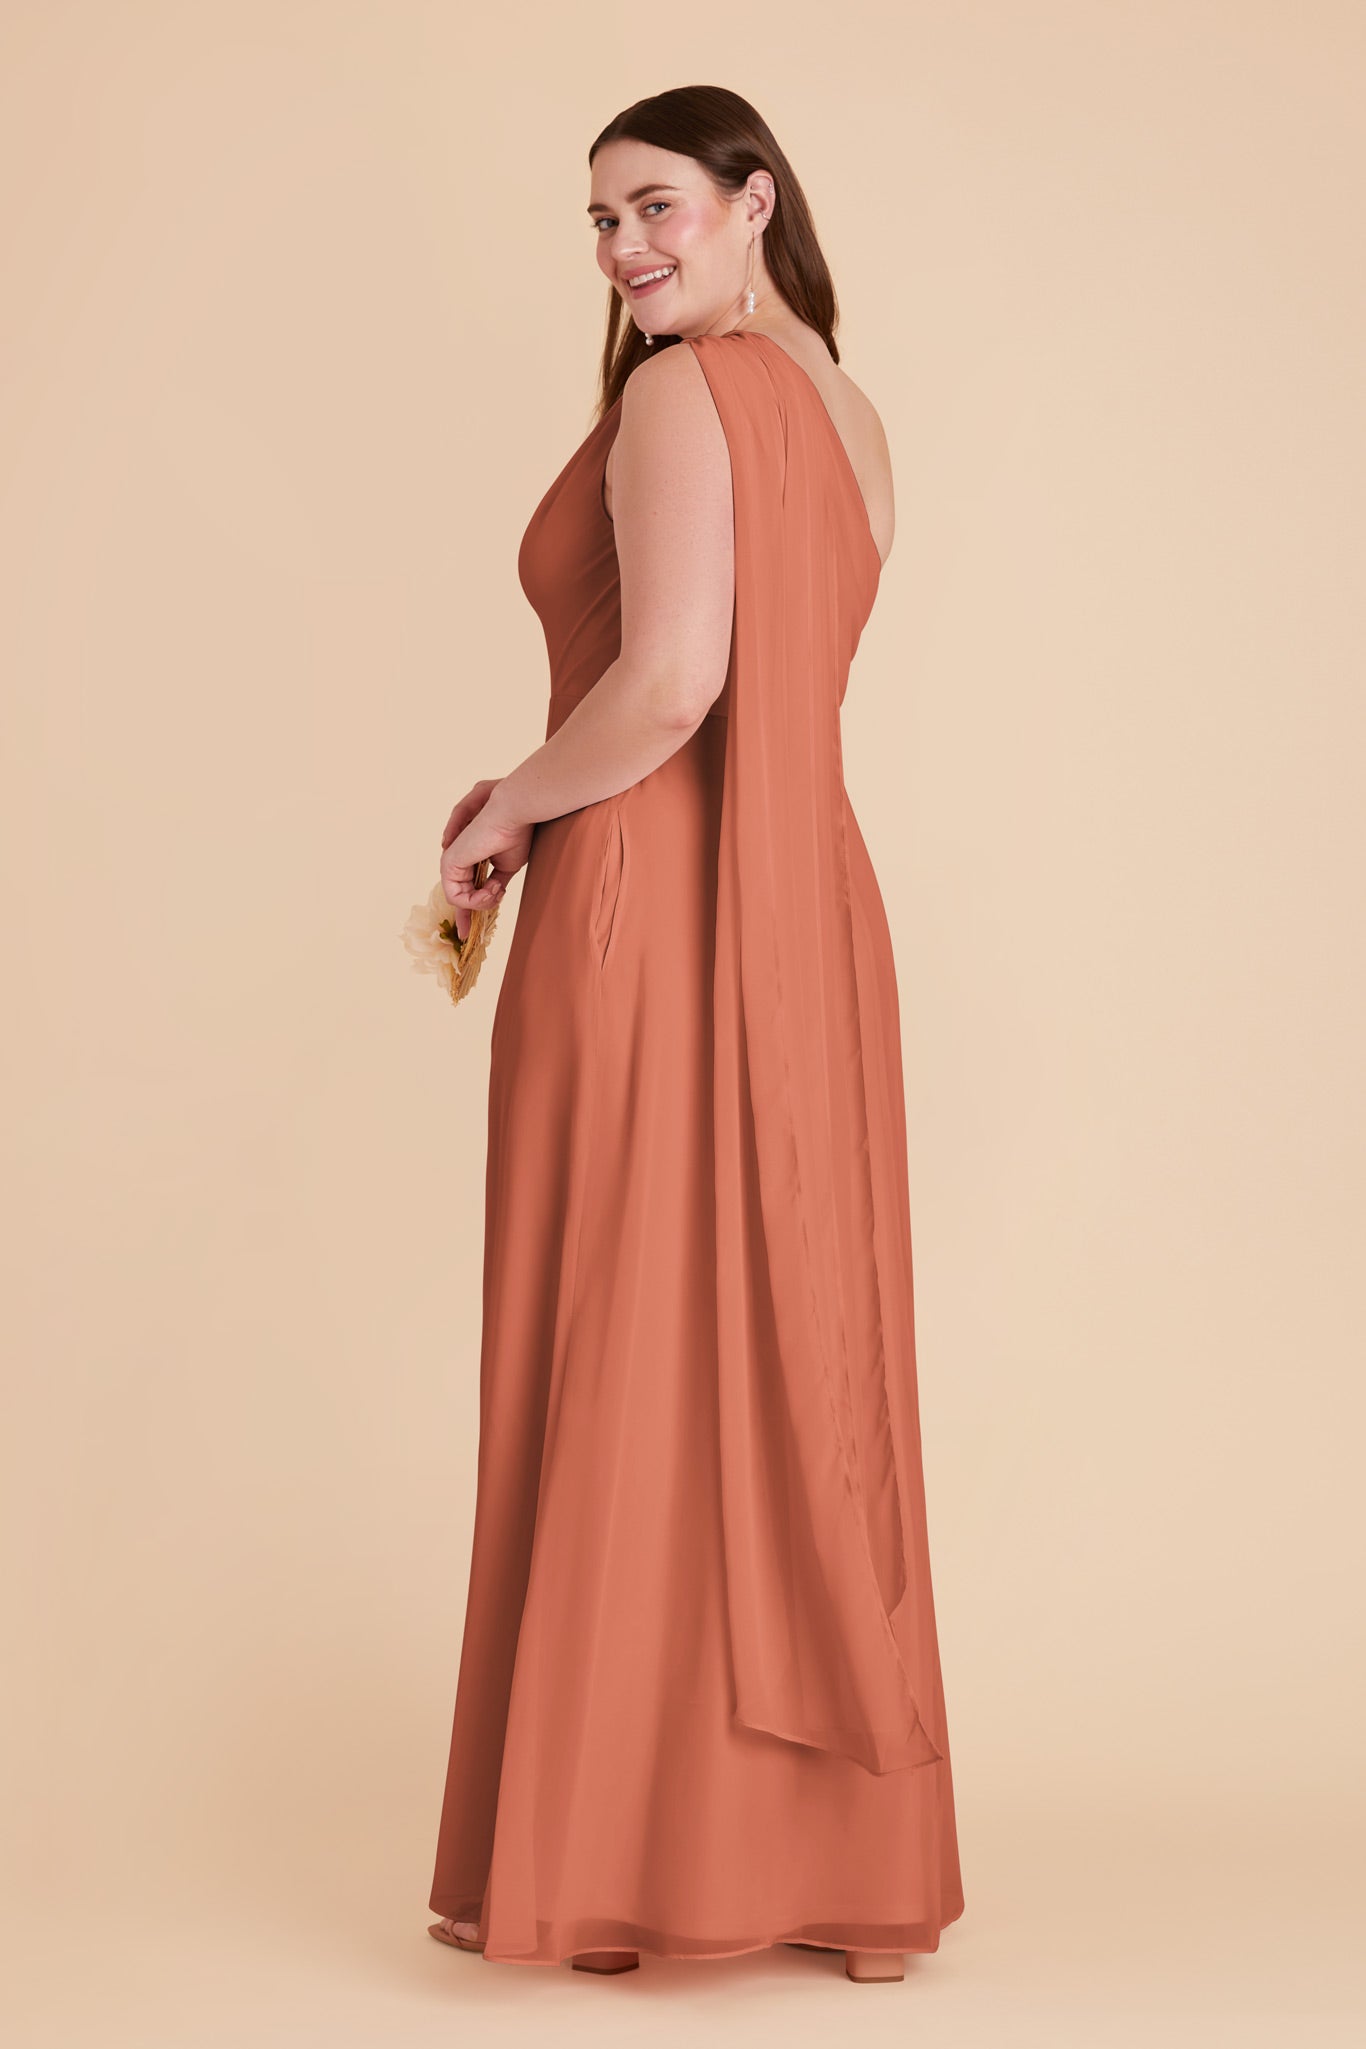 Terracotta Melissa Chiffon Dress by Birdy Grey